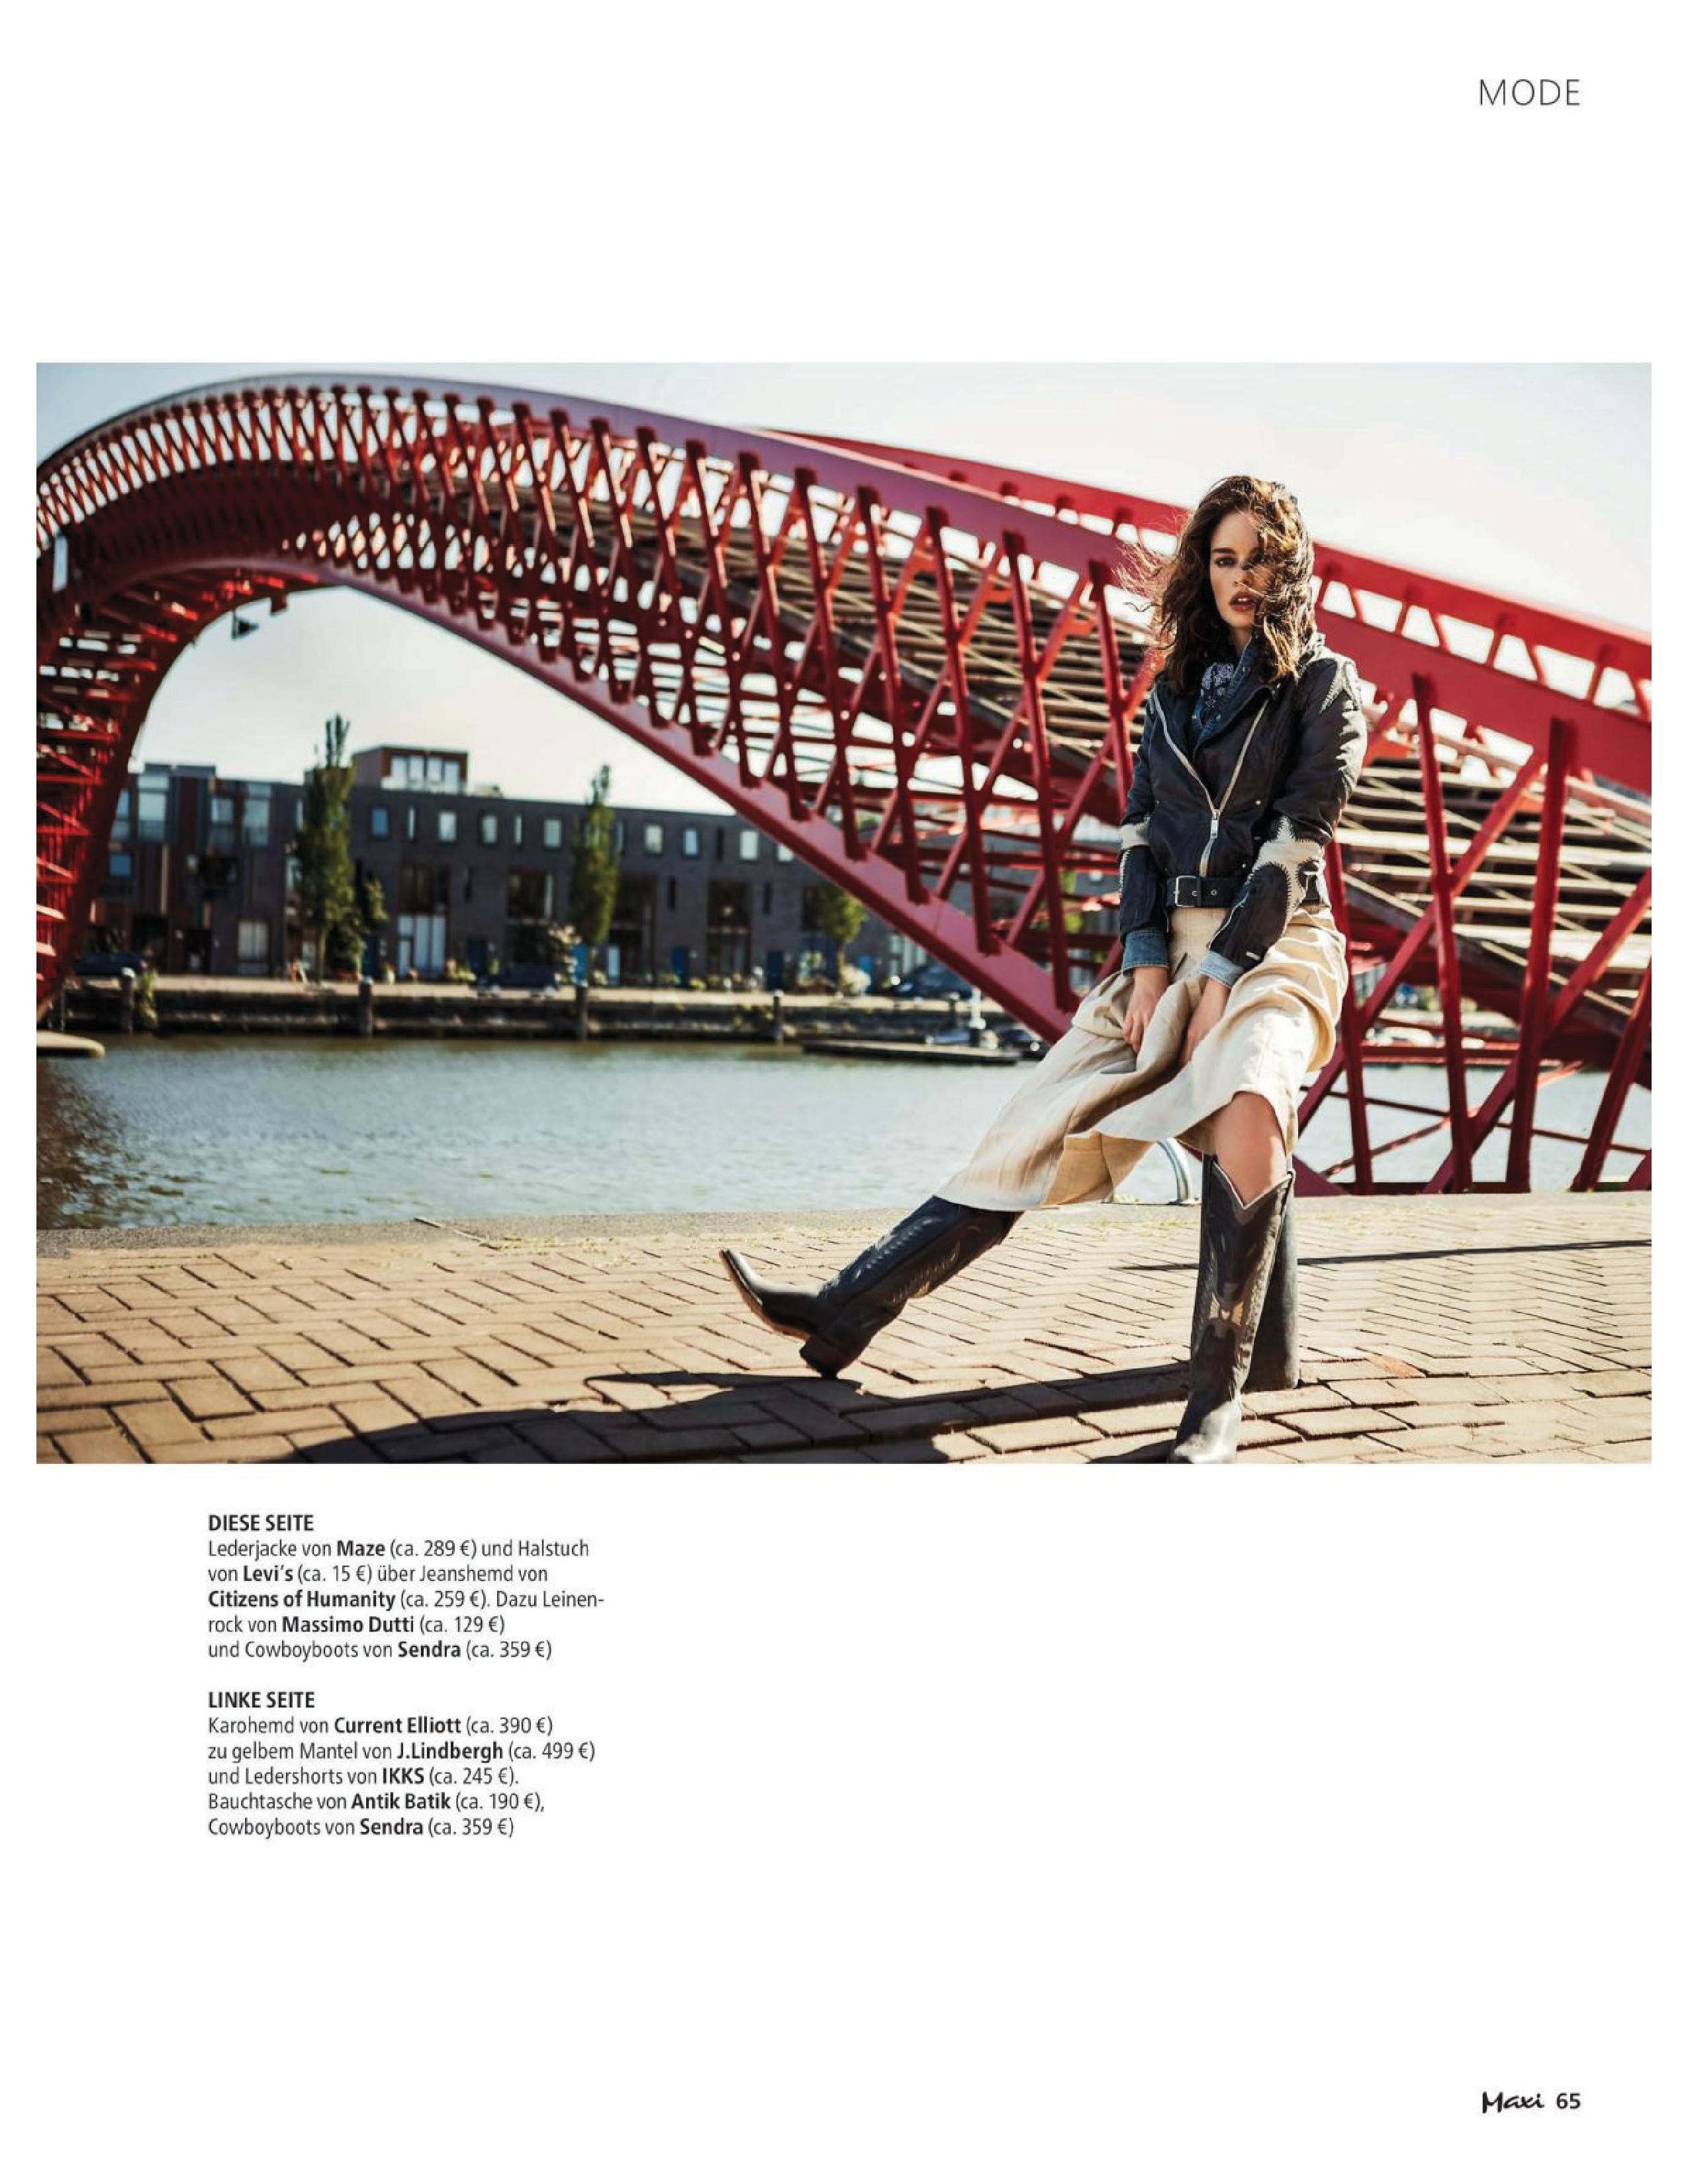 Maxi Magazine Models - Page 9 - General Discussion - Bellazon